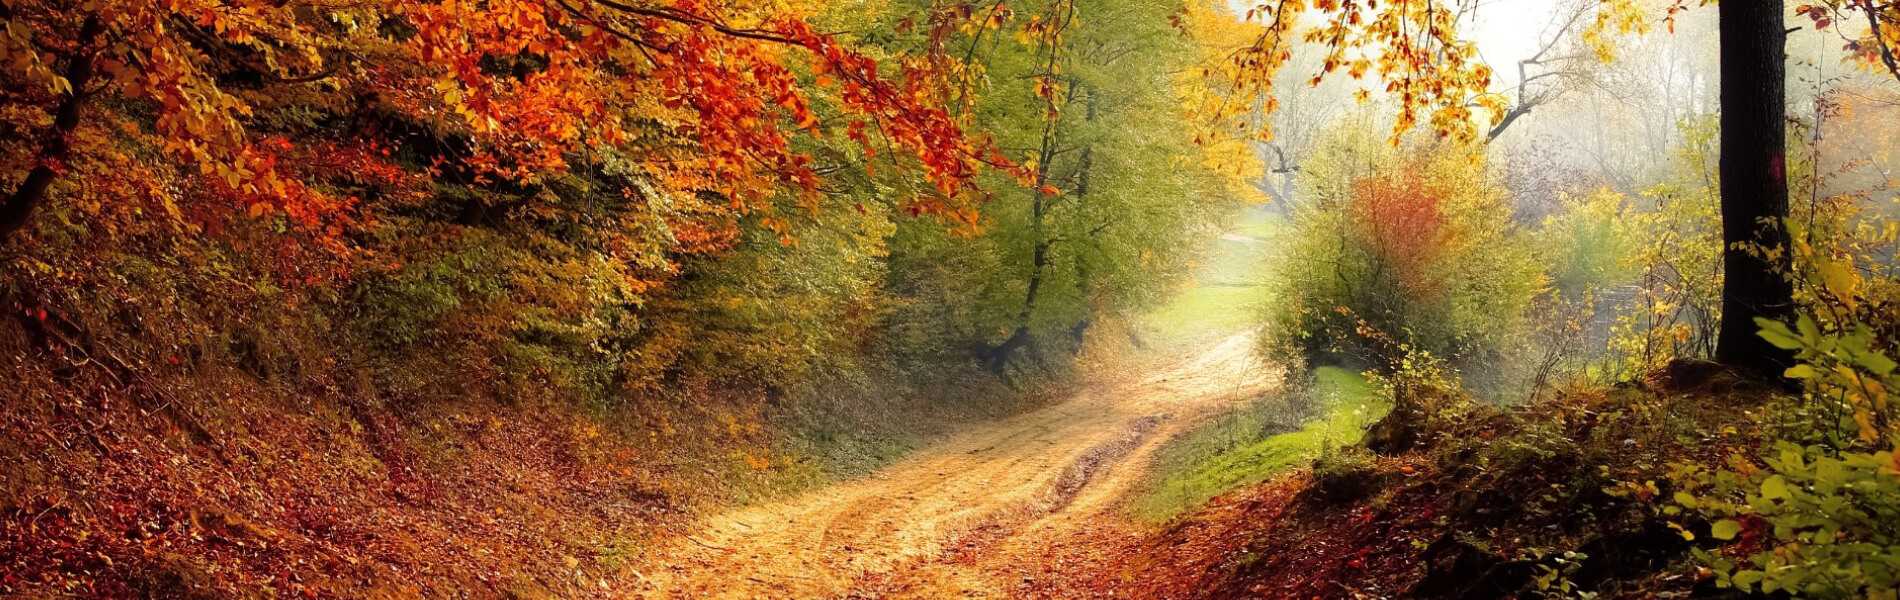 Path through woods in Autumn